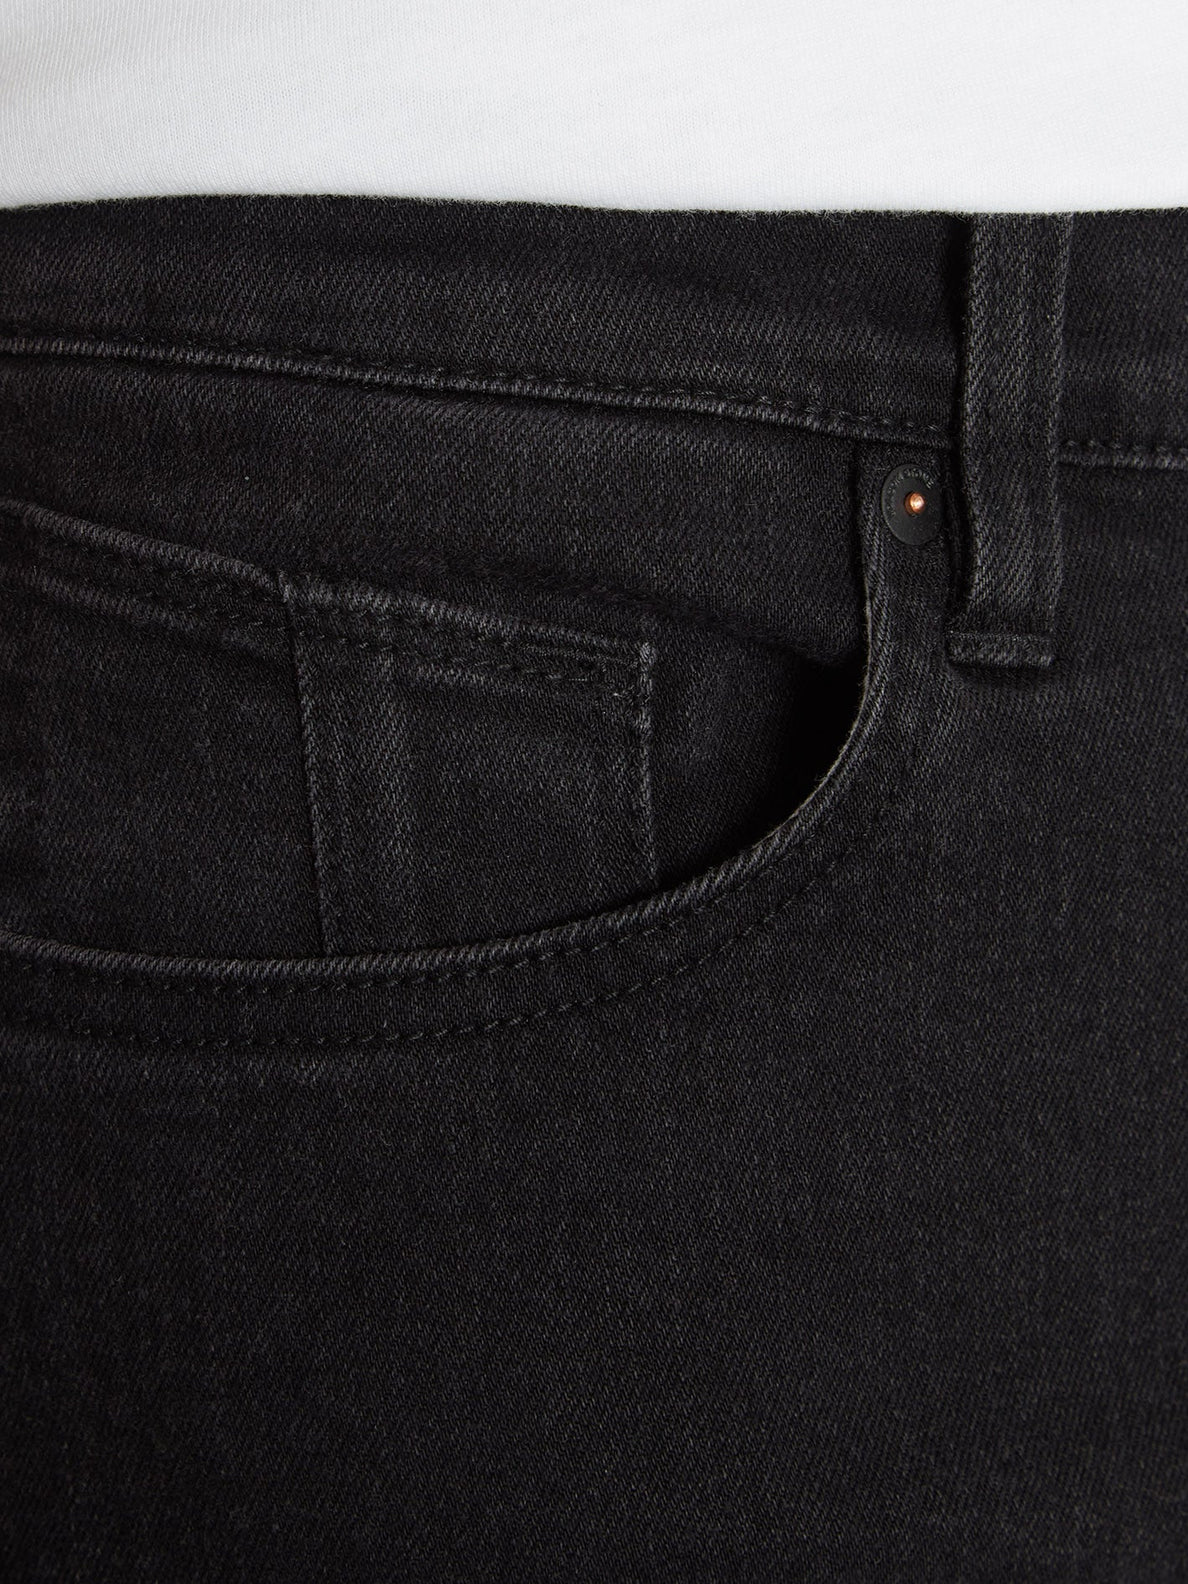 Vorta Jeans - BLACK OUT (A1932203_BKOB) [5]